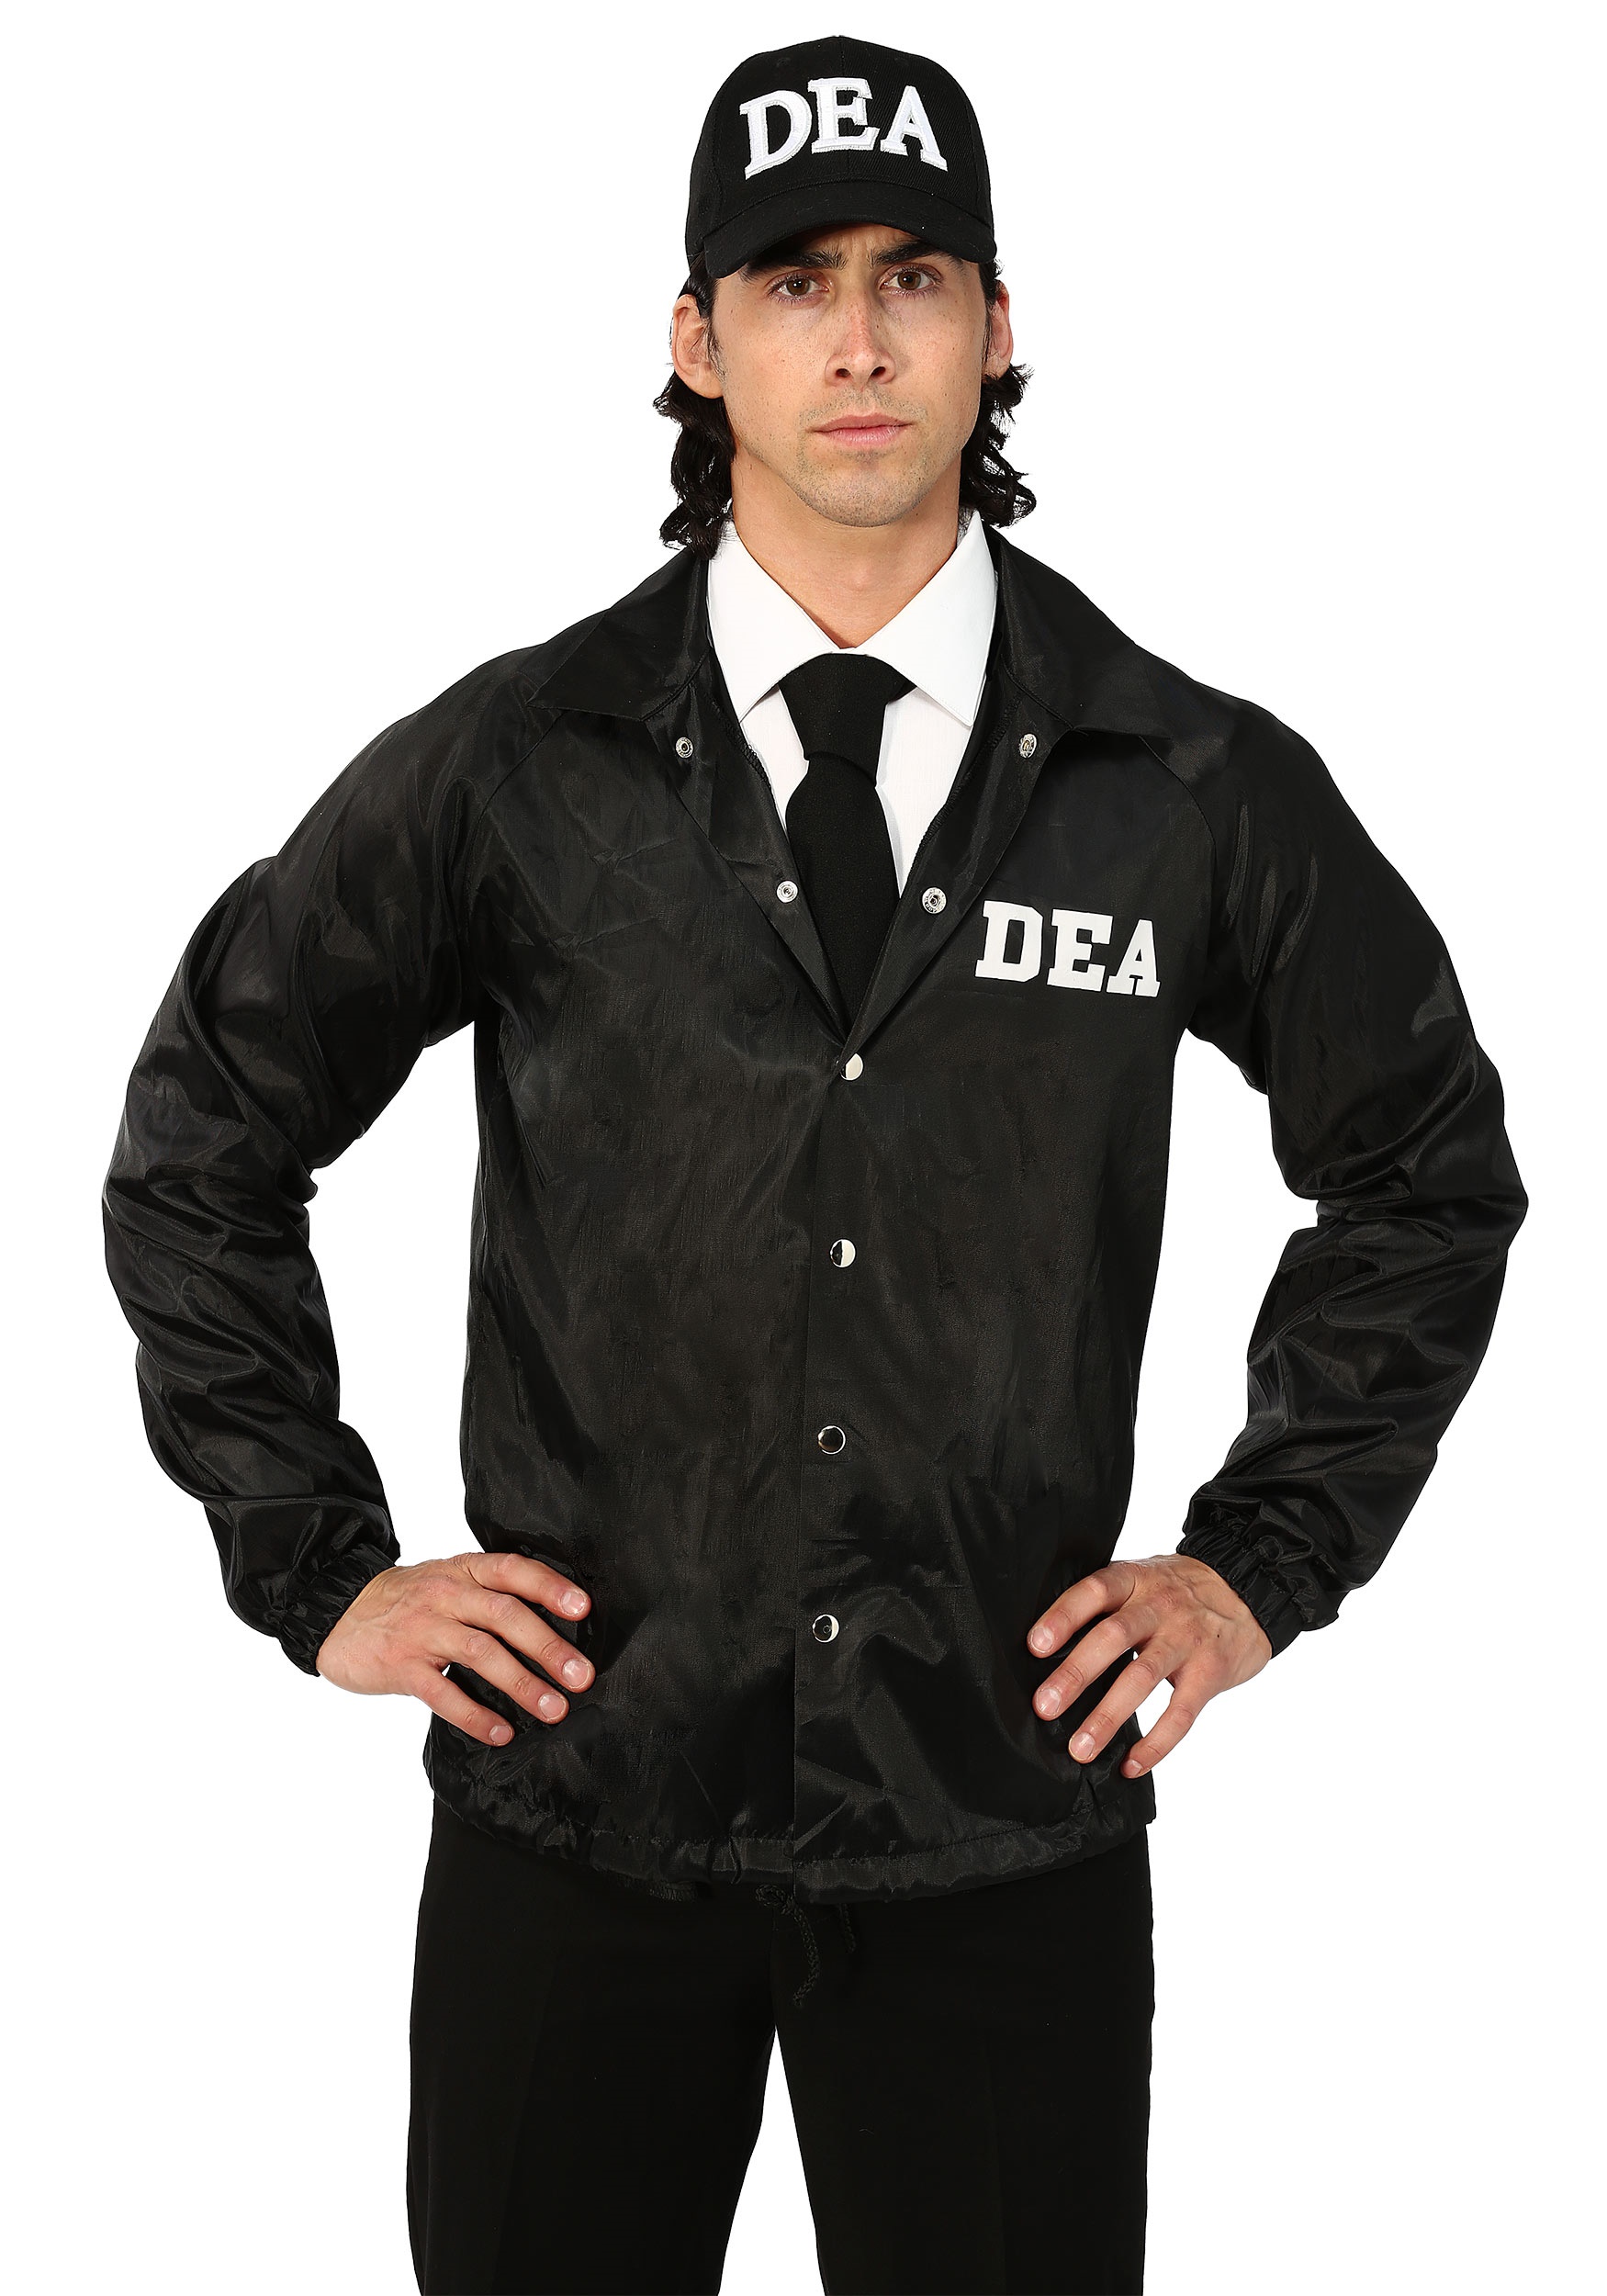 DEA Agent Fancy Dress Costume For Adults